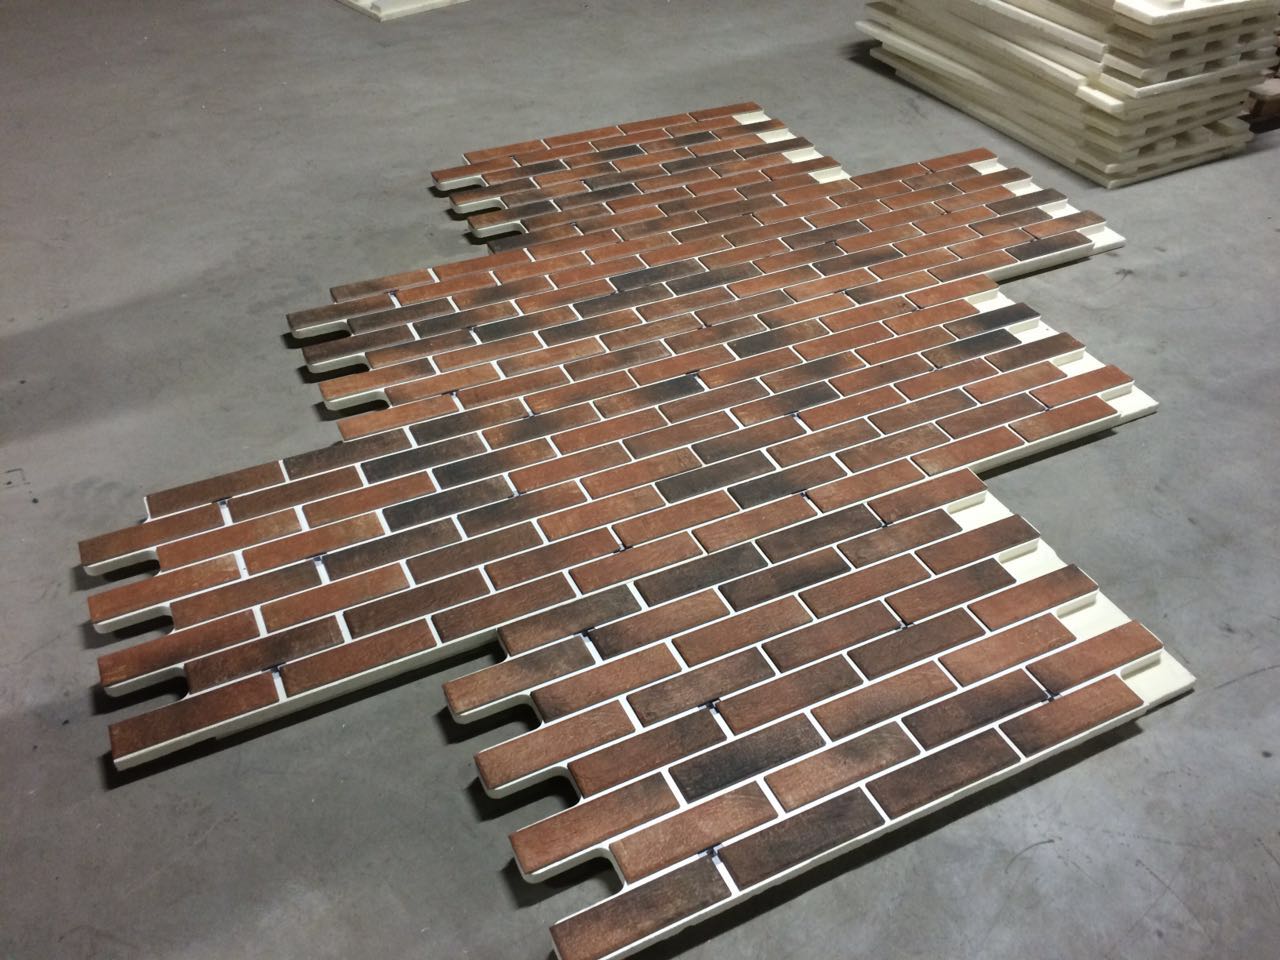 Retro Brick Salt, Толщина 30 мм, Фасадные Термопанели Rufford